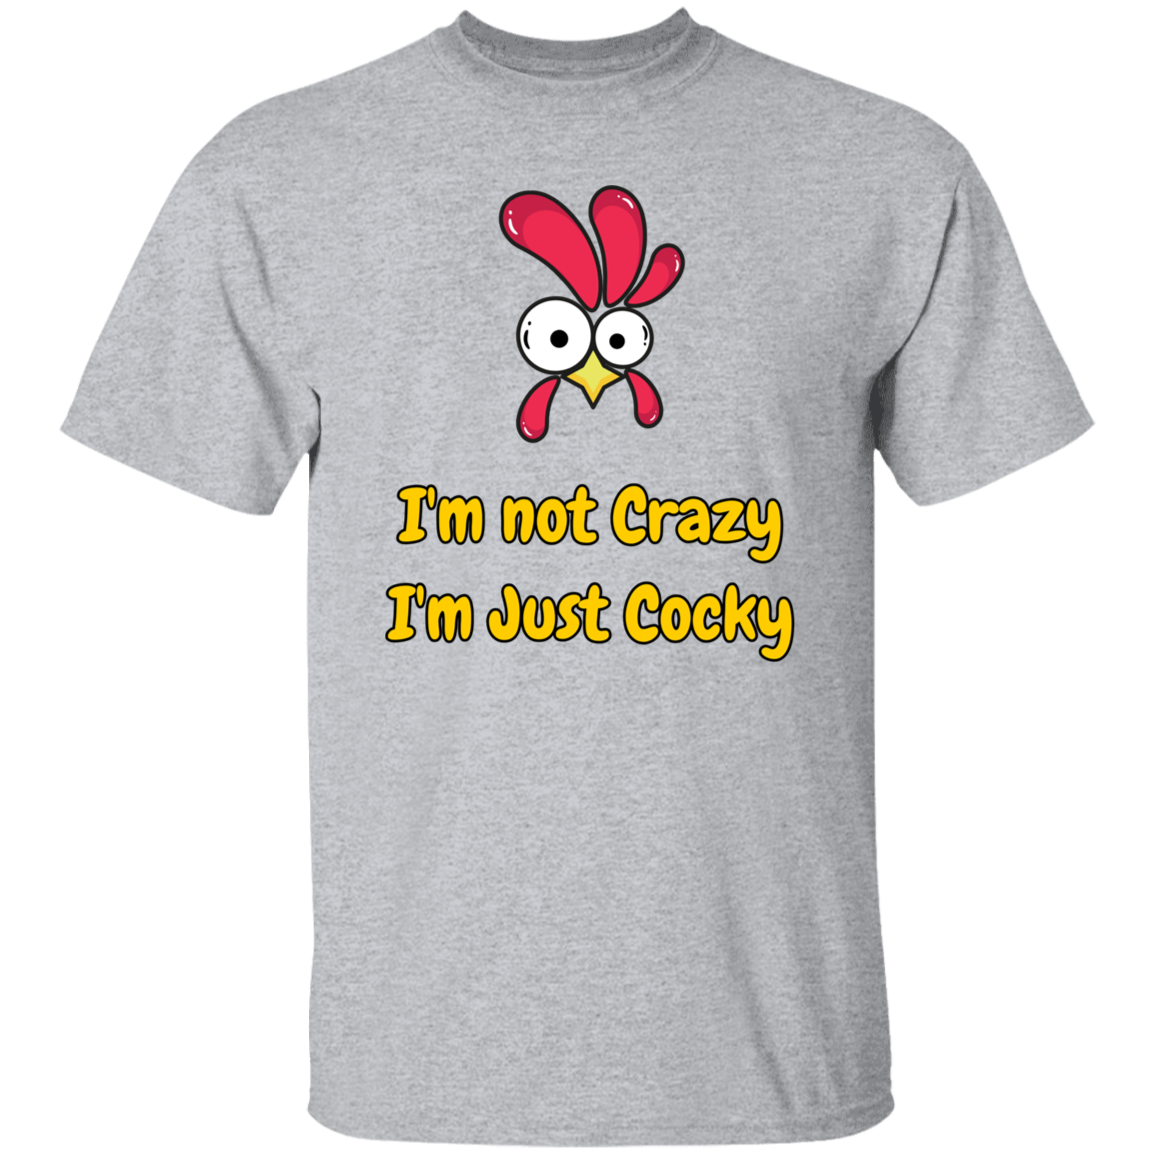 I'm not Crazy, I'm Just Cocky - Men's T-Shirt